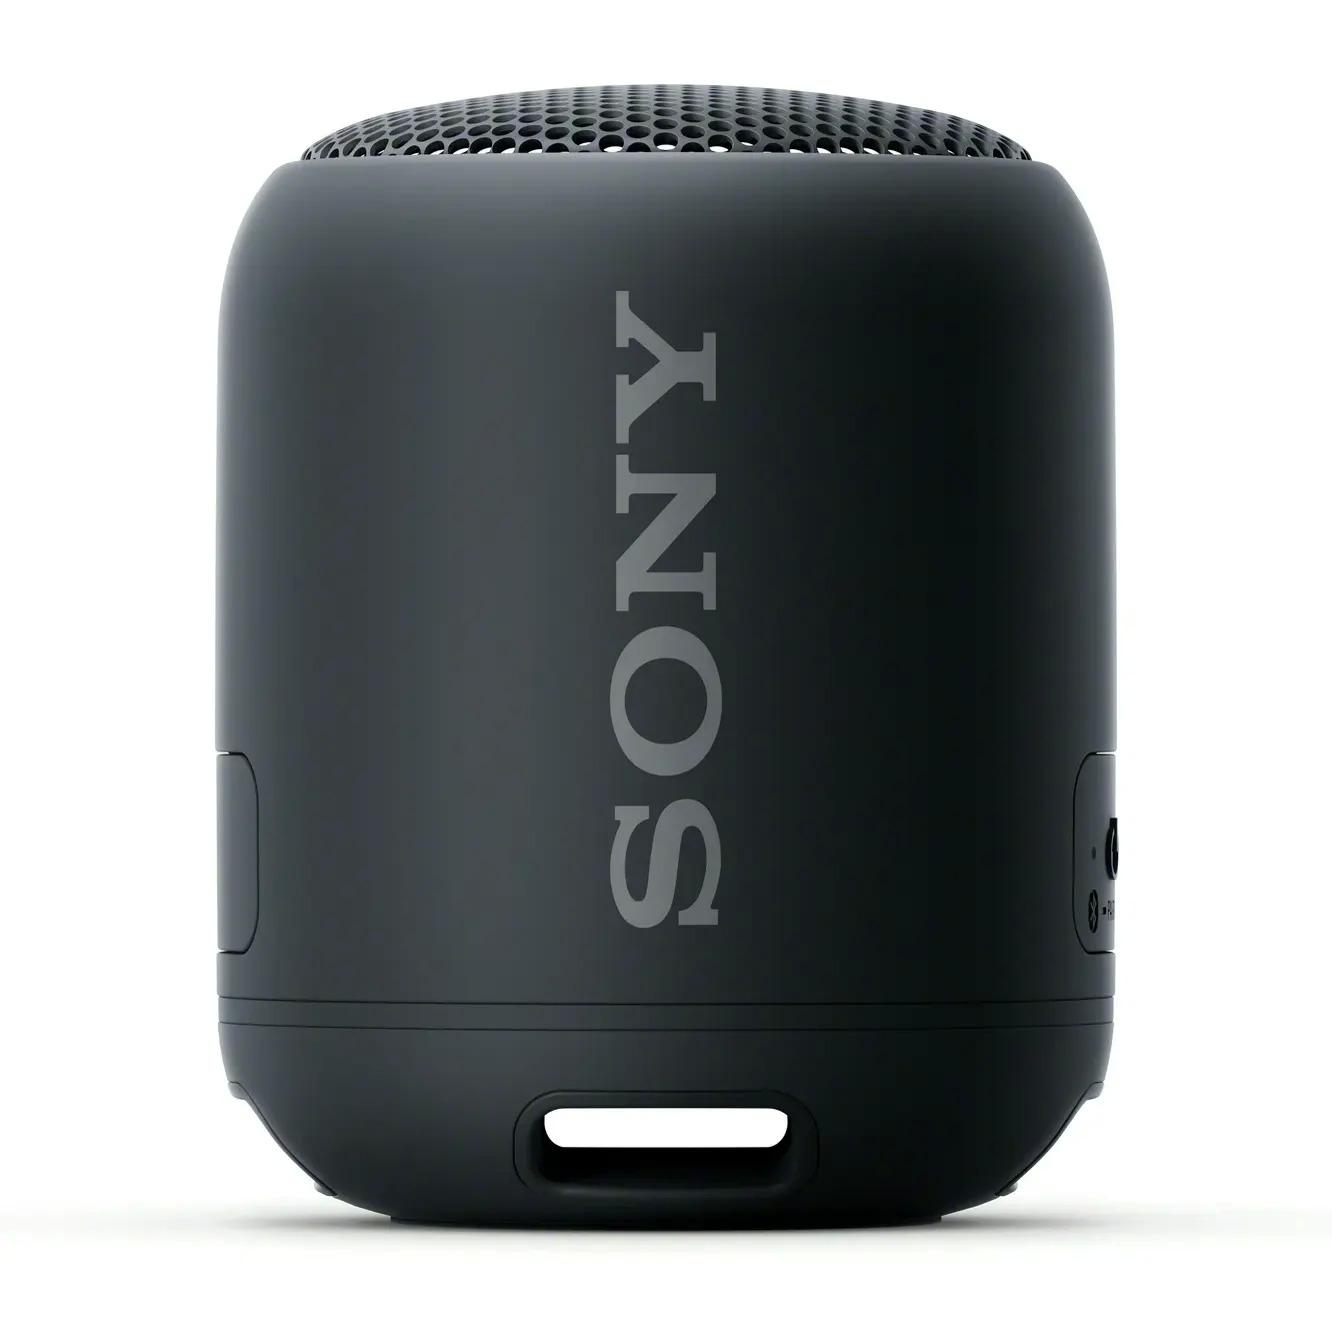 Sony Portable Waterproof Bluetooth Speaker for $29.88